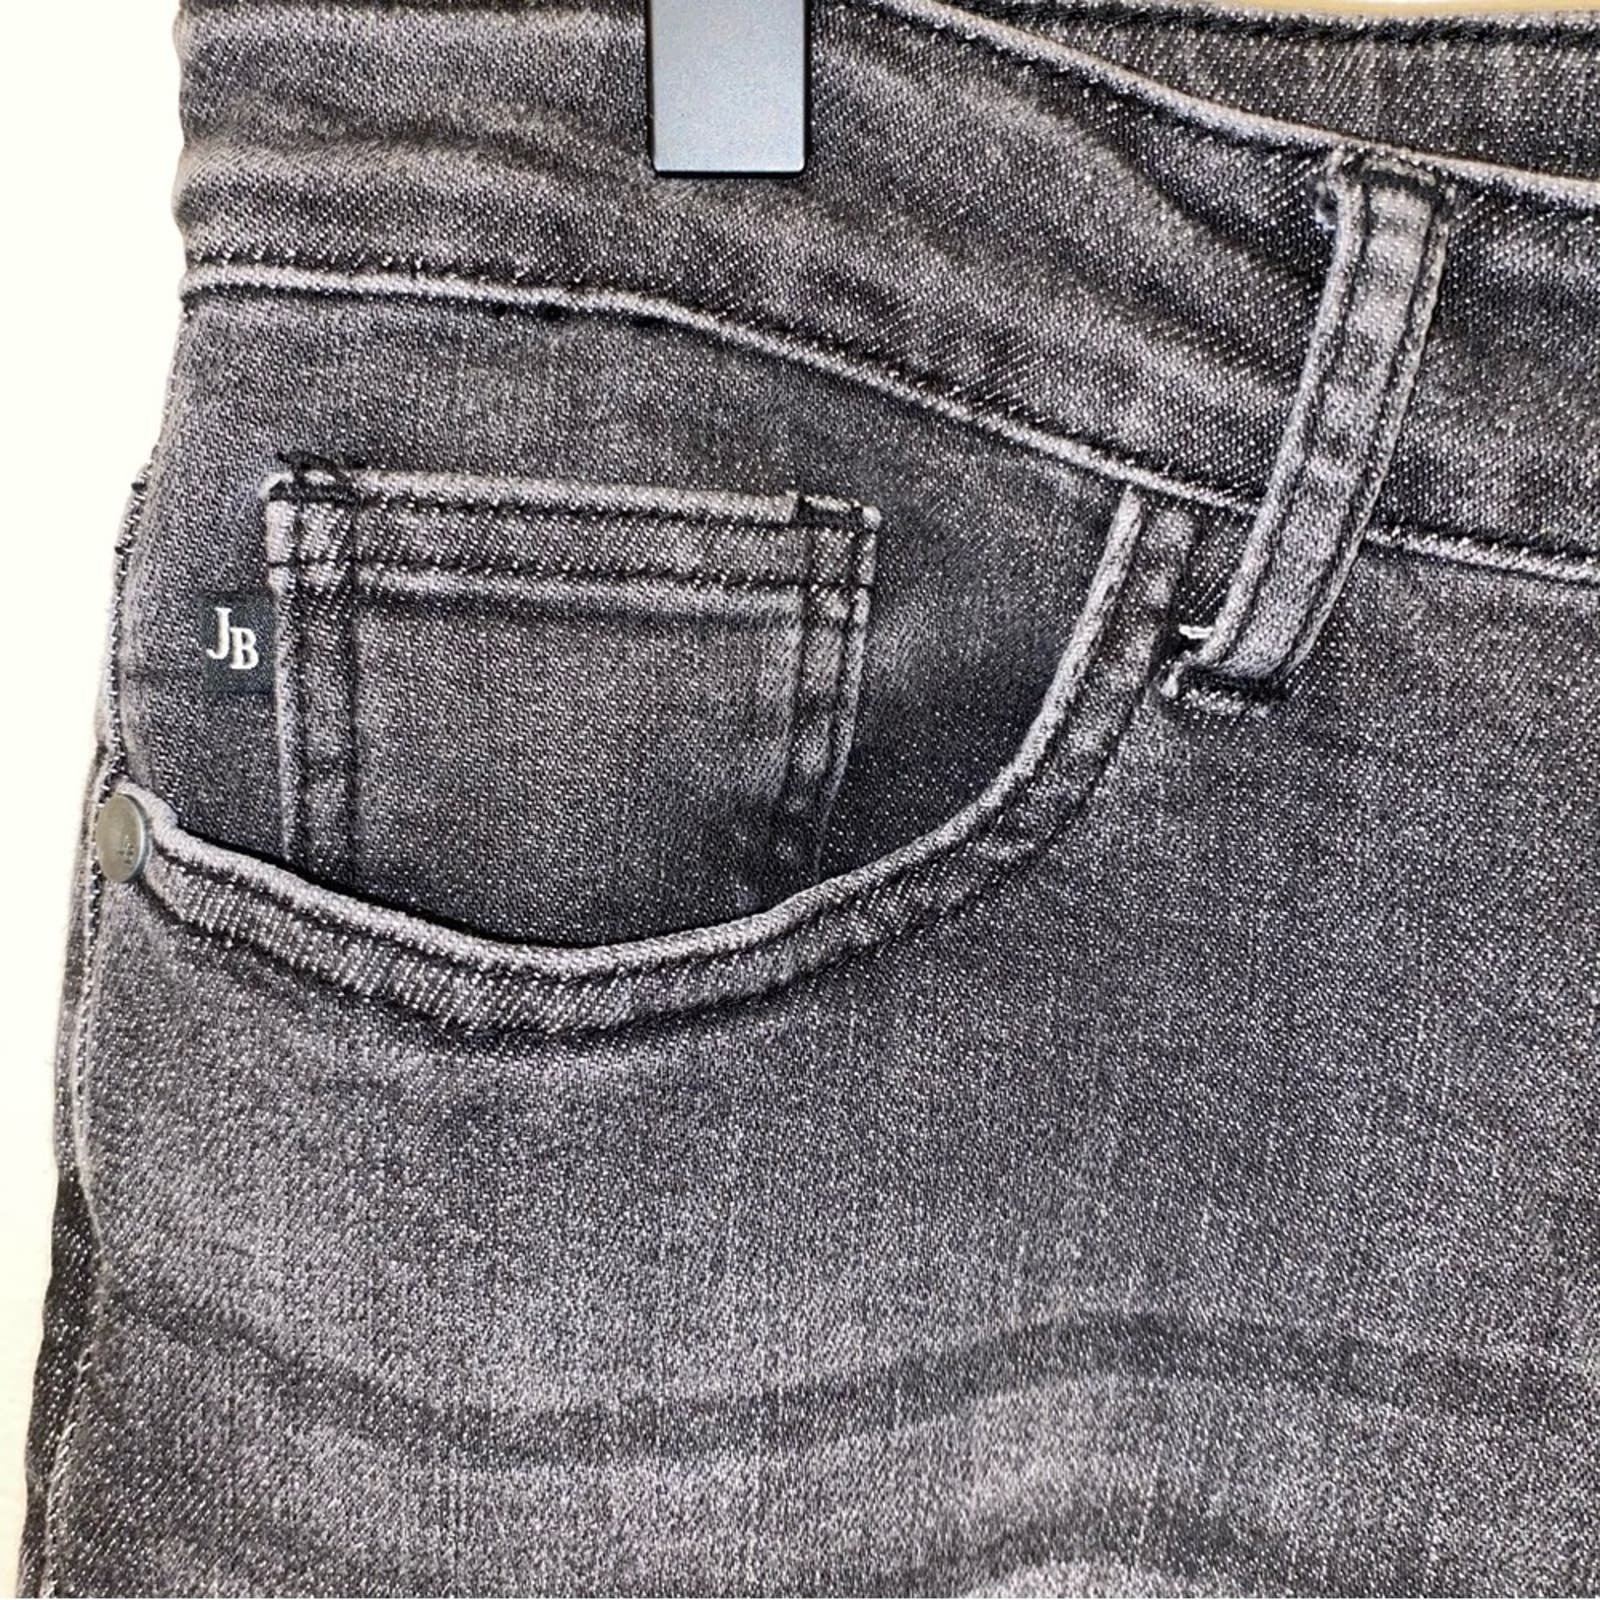 Popular Judy Blue Women´s Black Denim Boyfriend Fit Faded Wash Jeans size 29 gGgq0TaQL outlet online shop